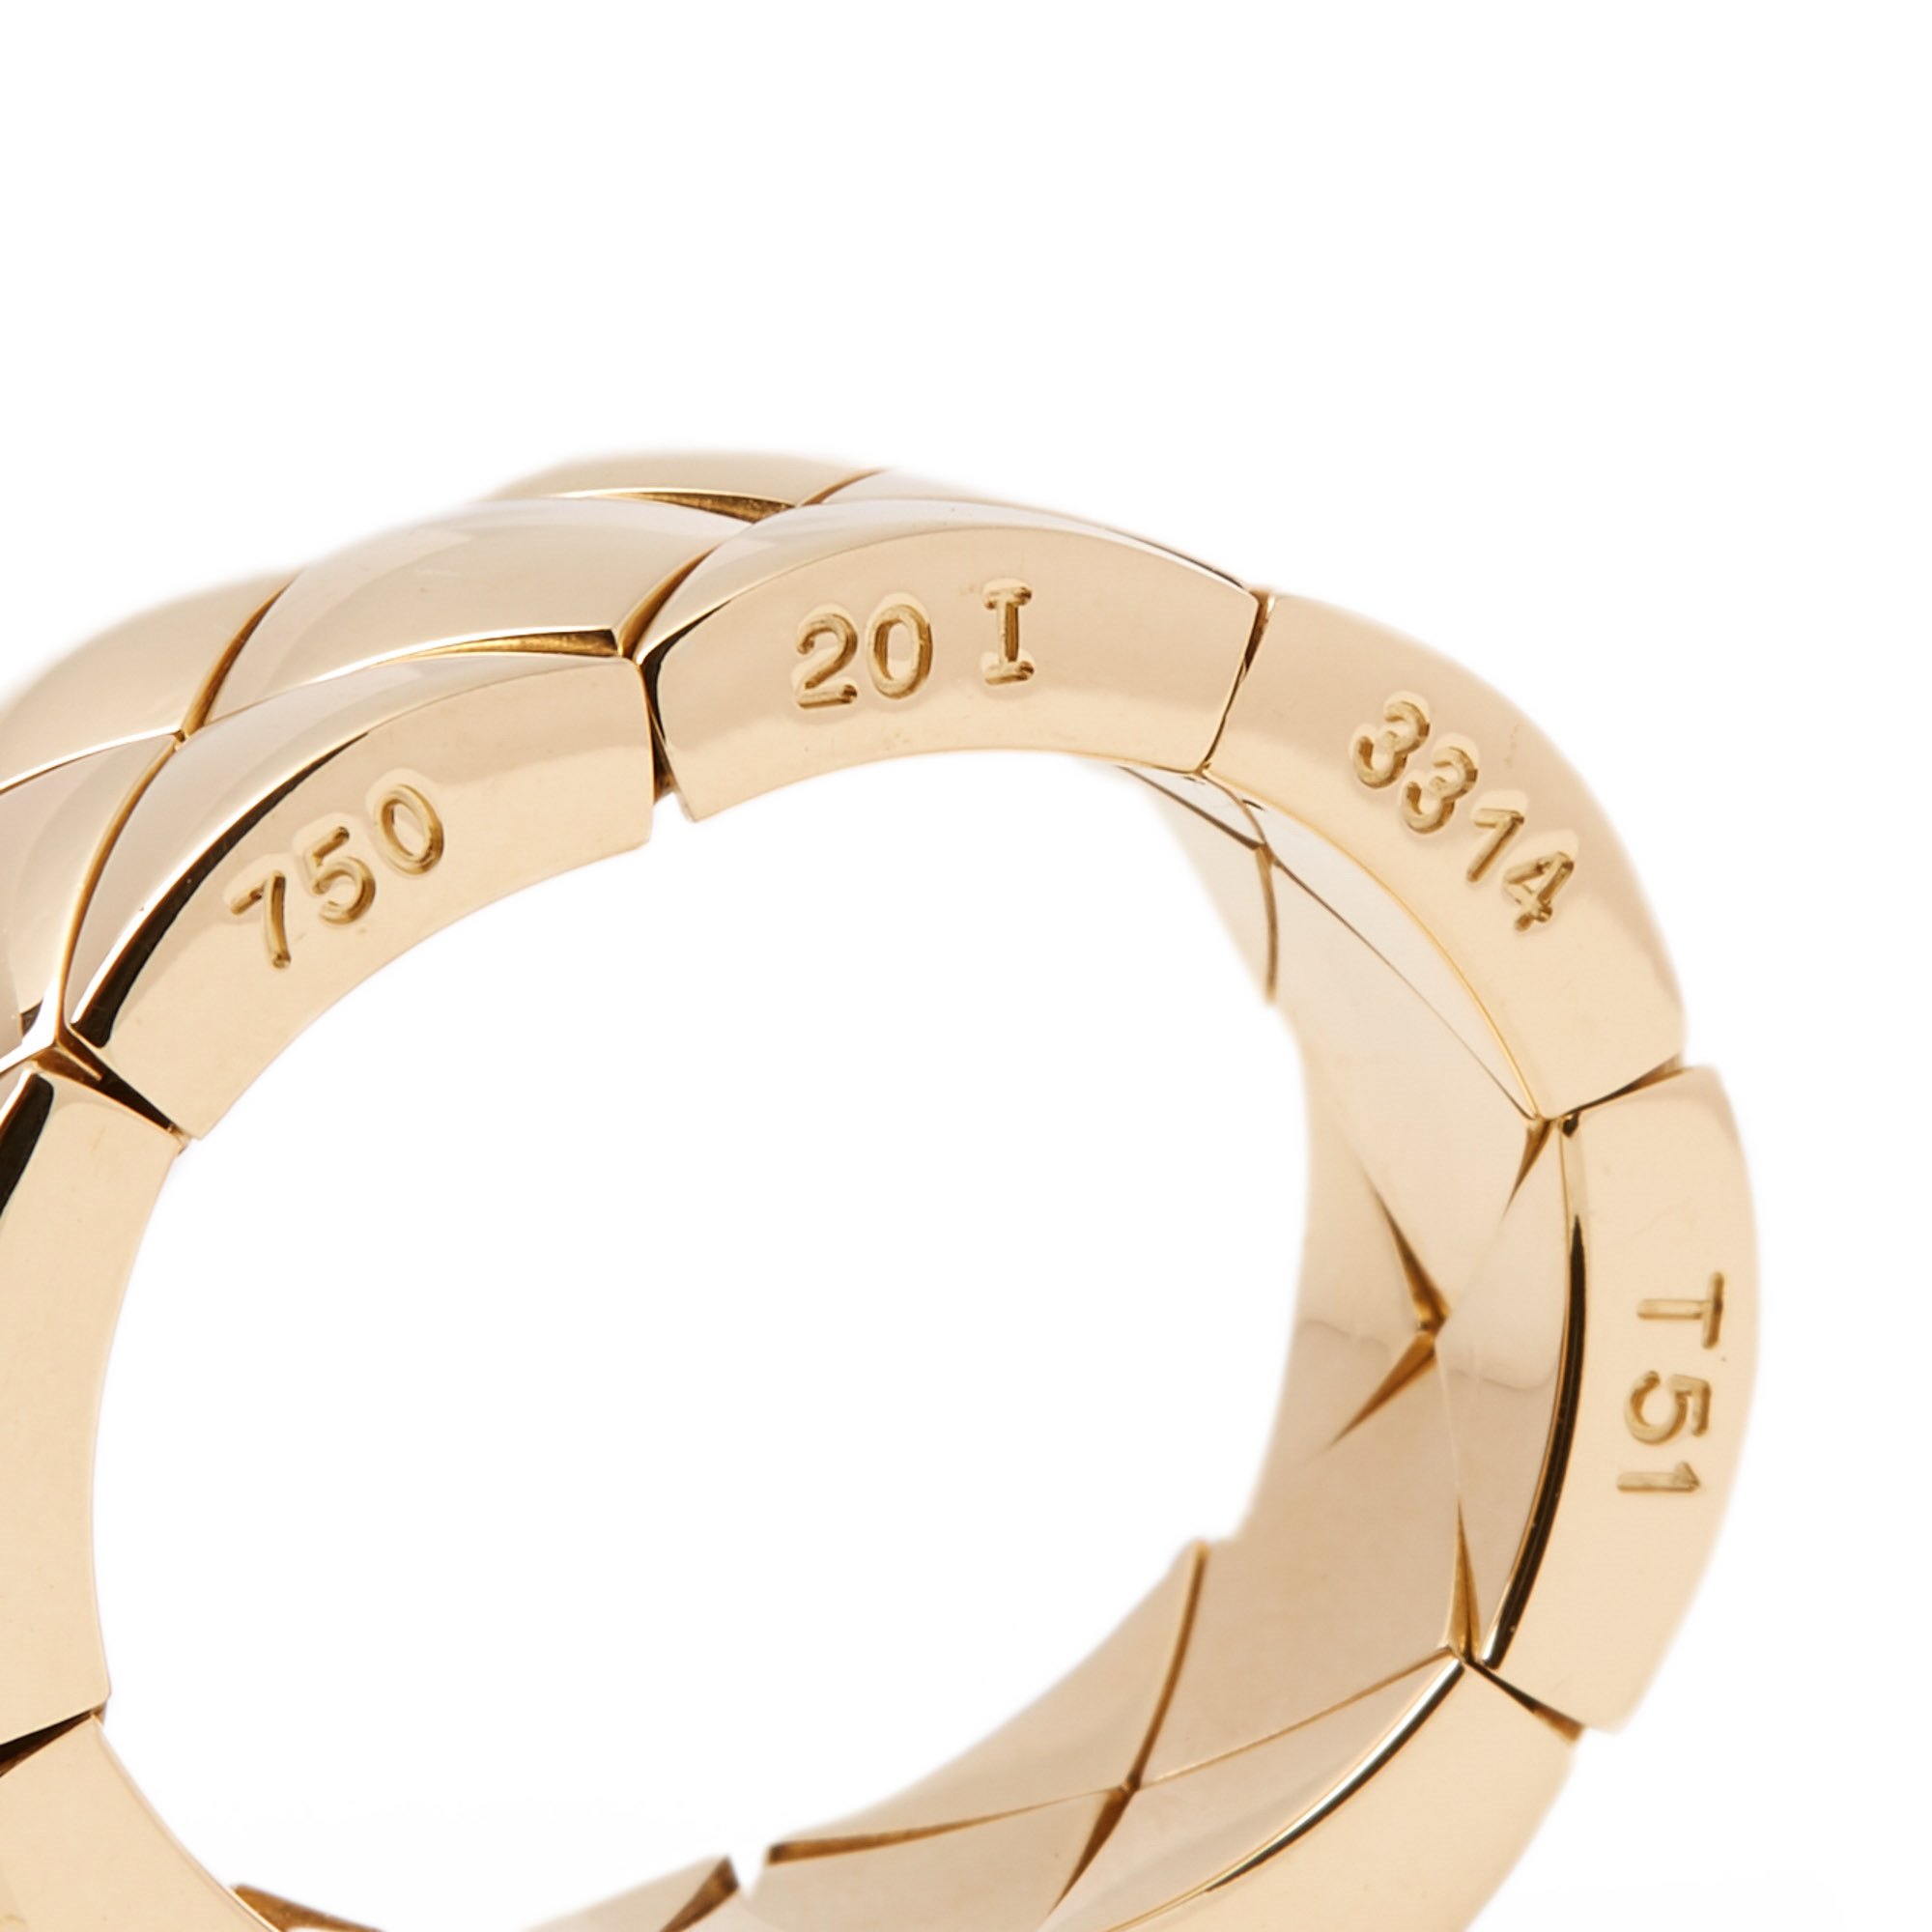 Chanel 18k Yellow Gold Coco Crush Dress Ring